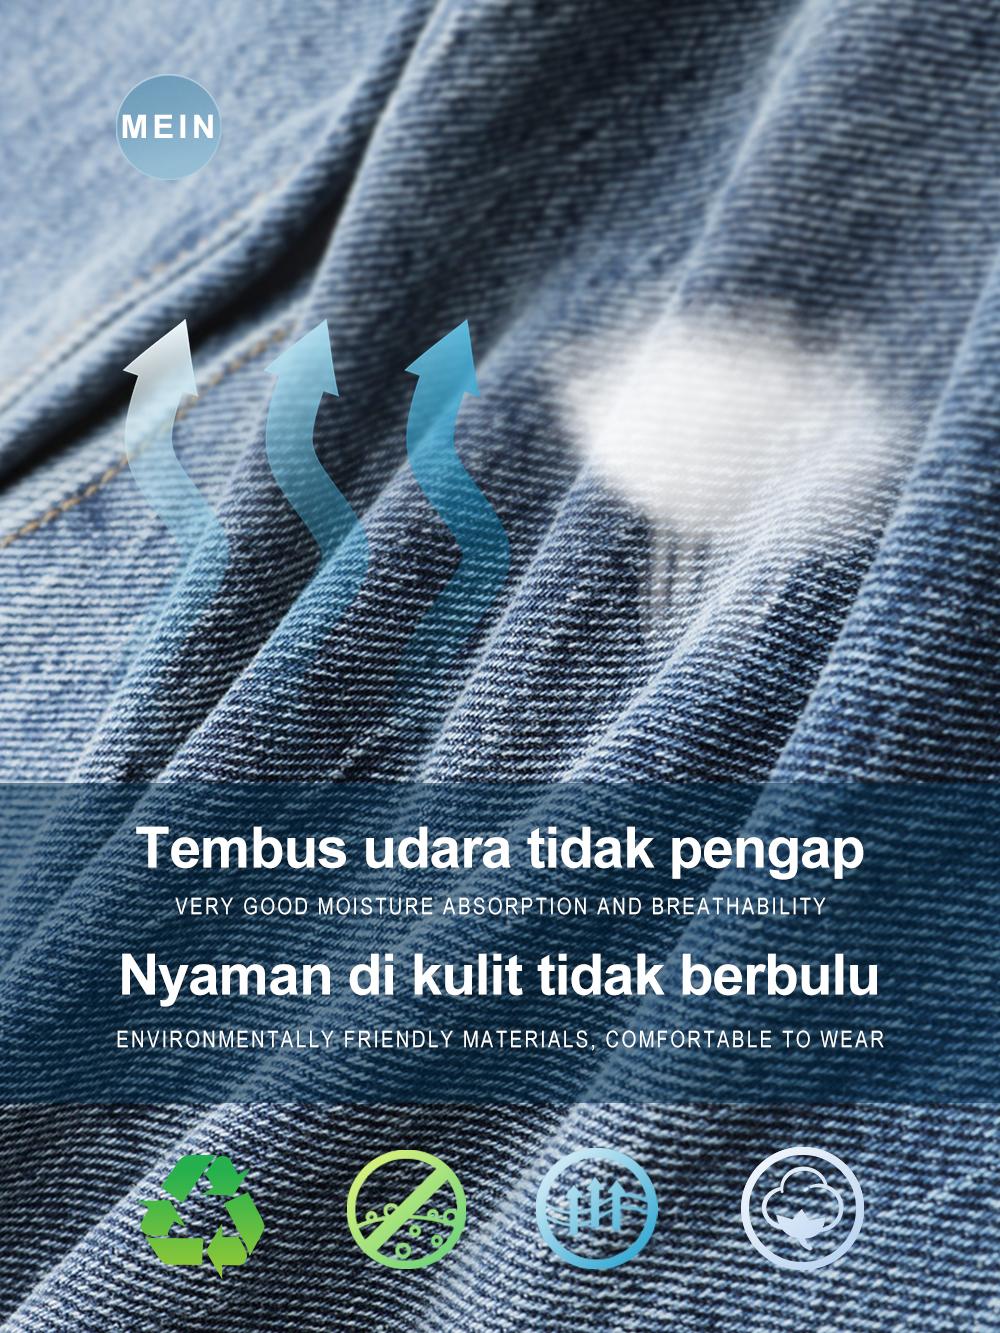 [MEIN] 8102 Straight-Leg Jeans High Waist Jeans Kaki Katun Panjang Celana Boyfriend